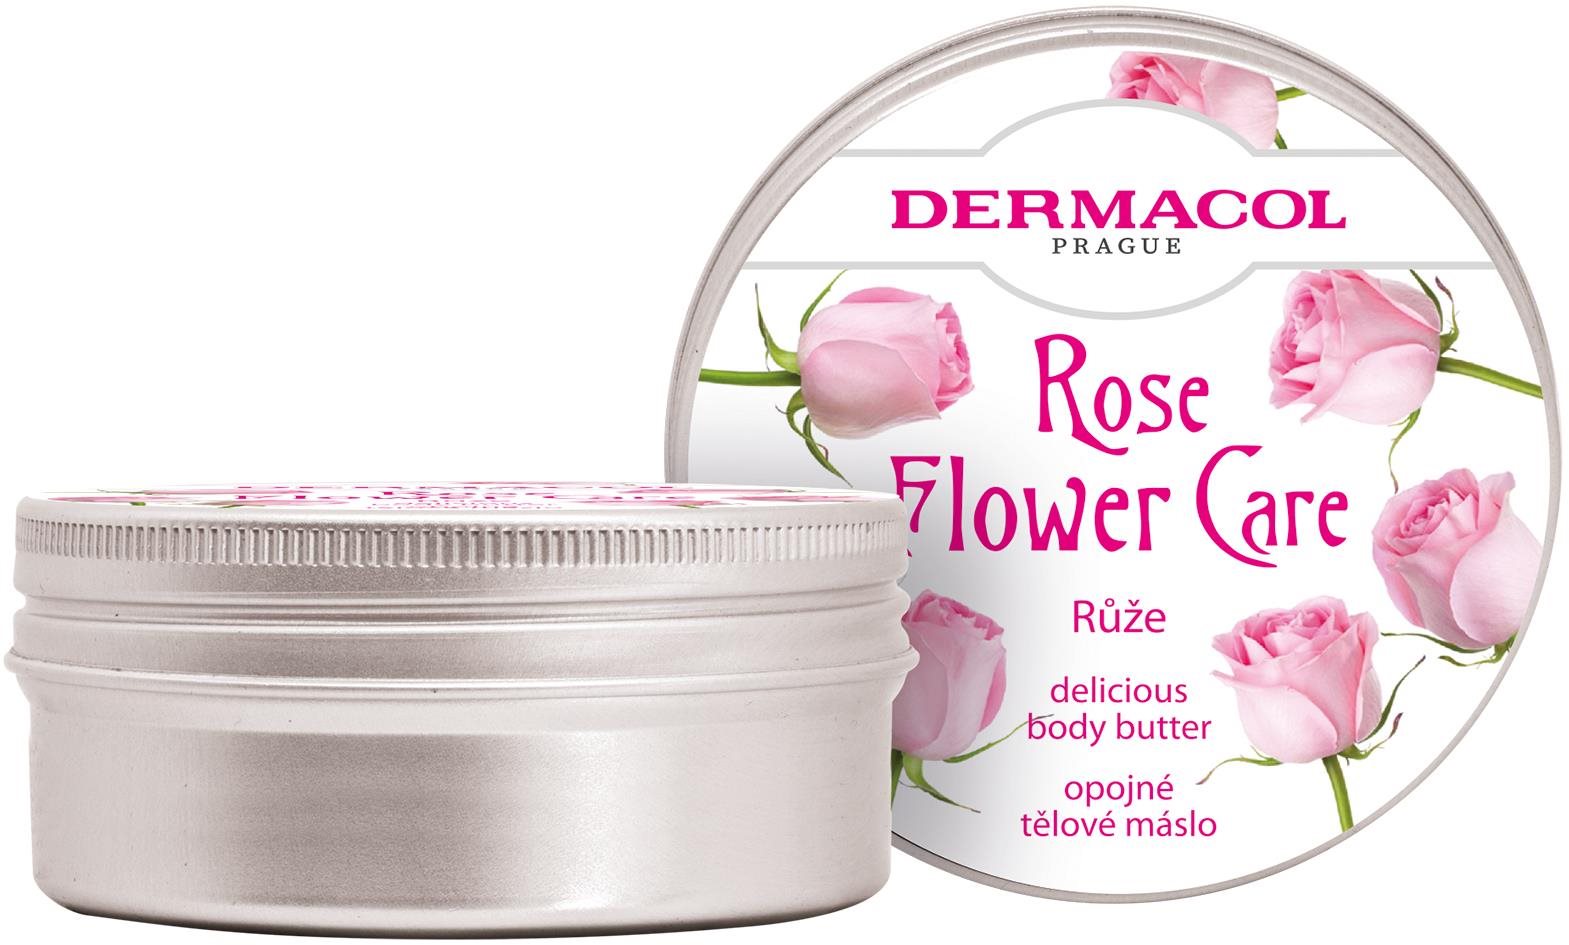 DERMACOL Rose Flower Care Body Butter 75 ml